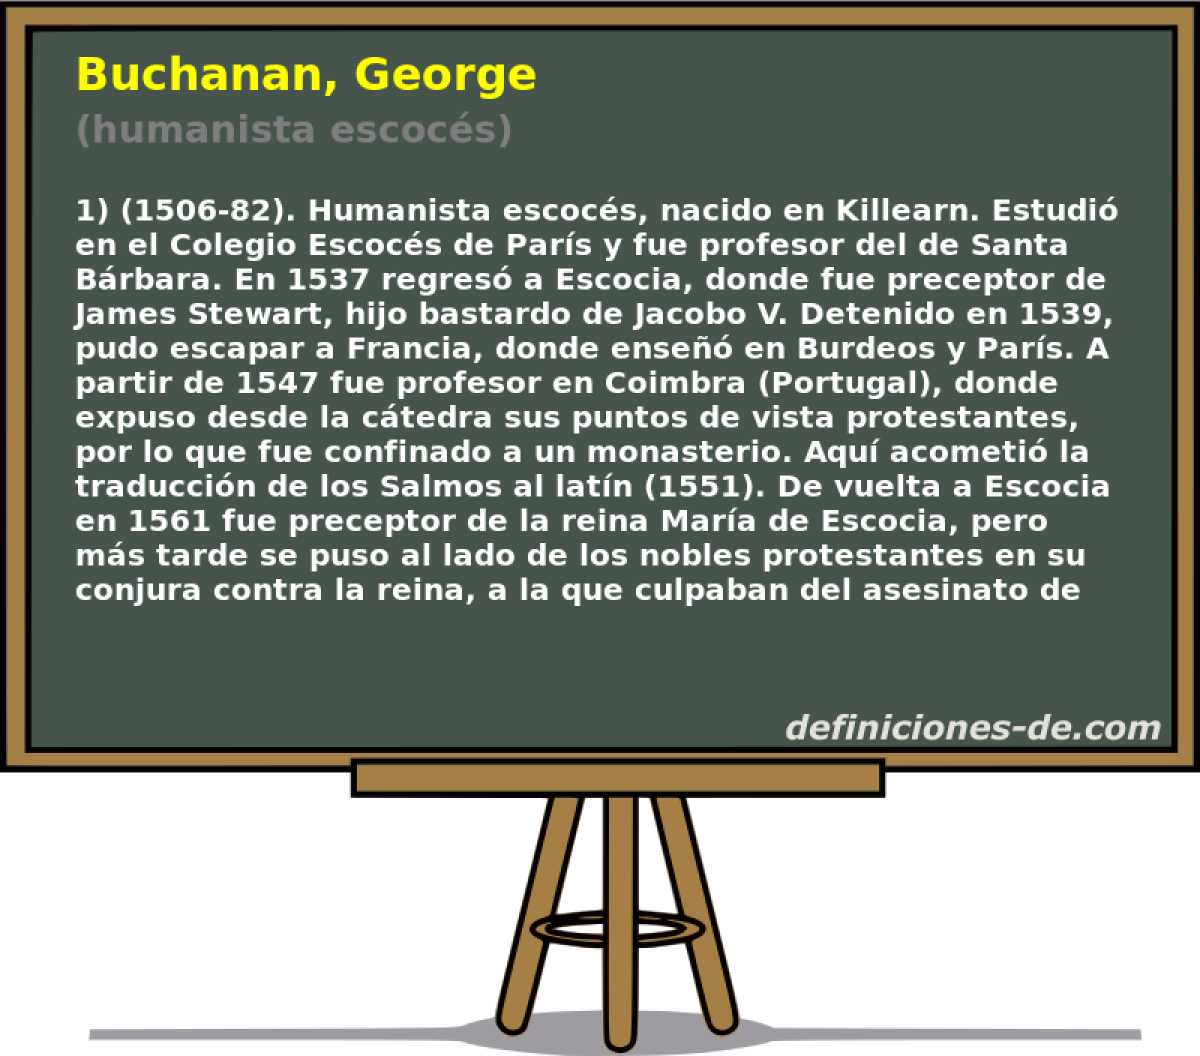 Buchanan, George (humanista escocs)